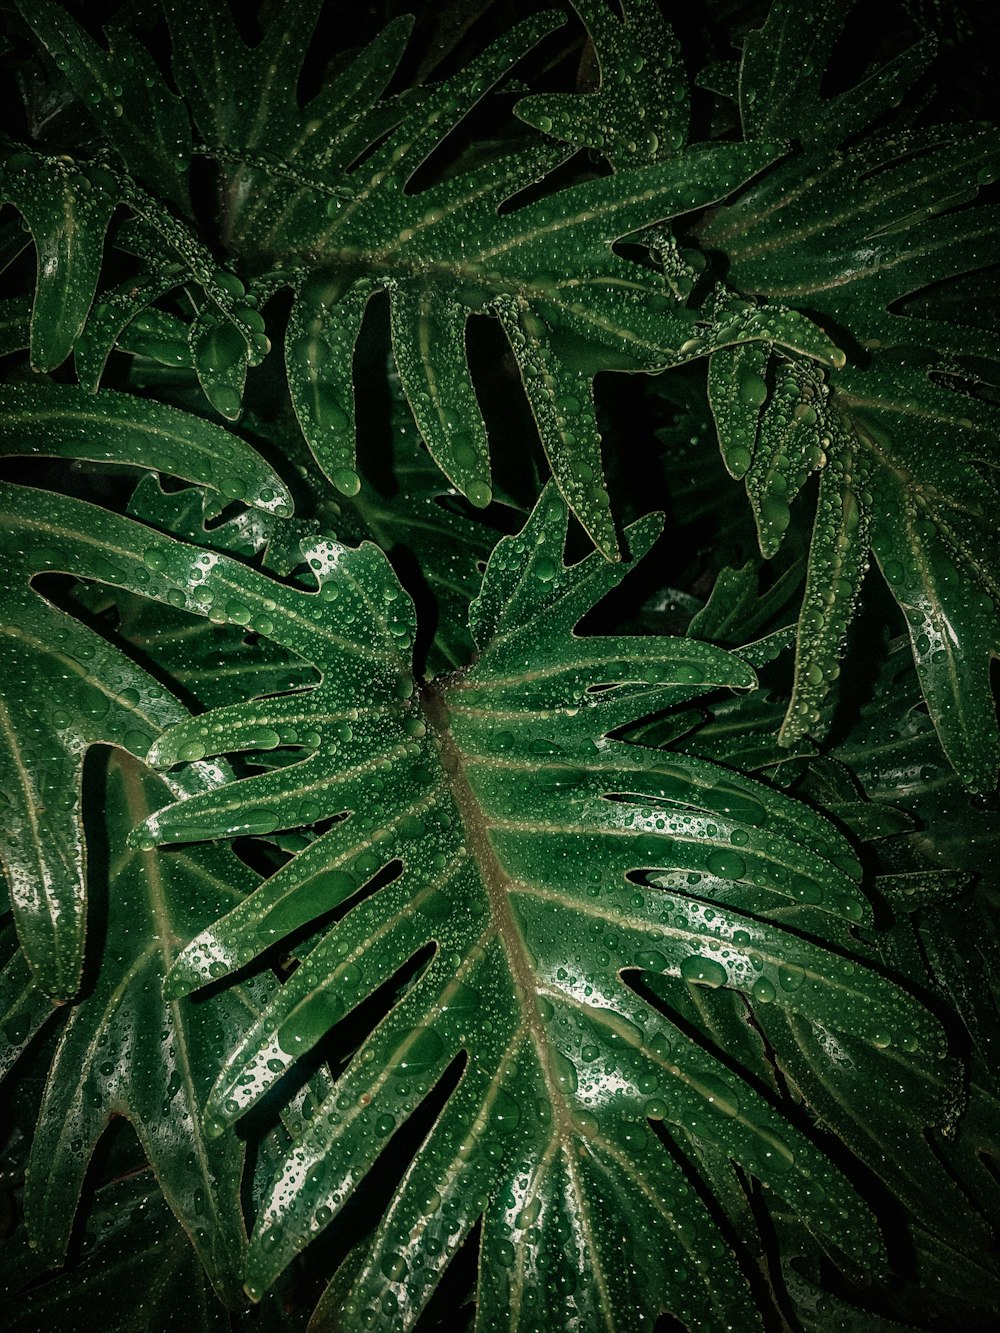 Planta de palma verde